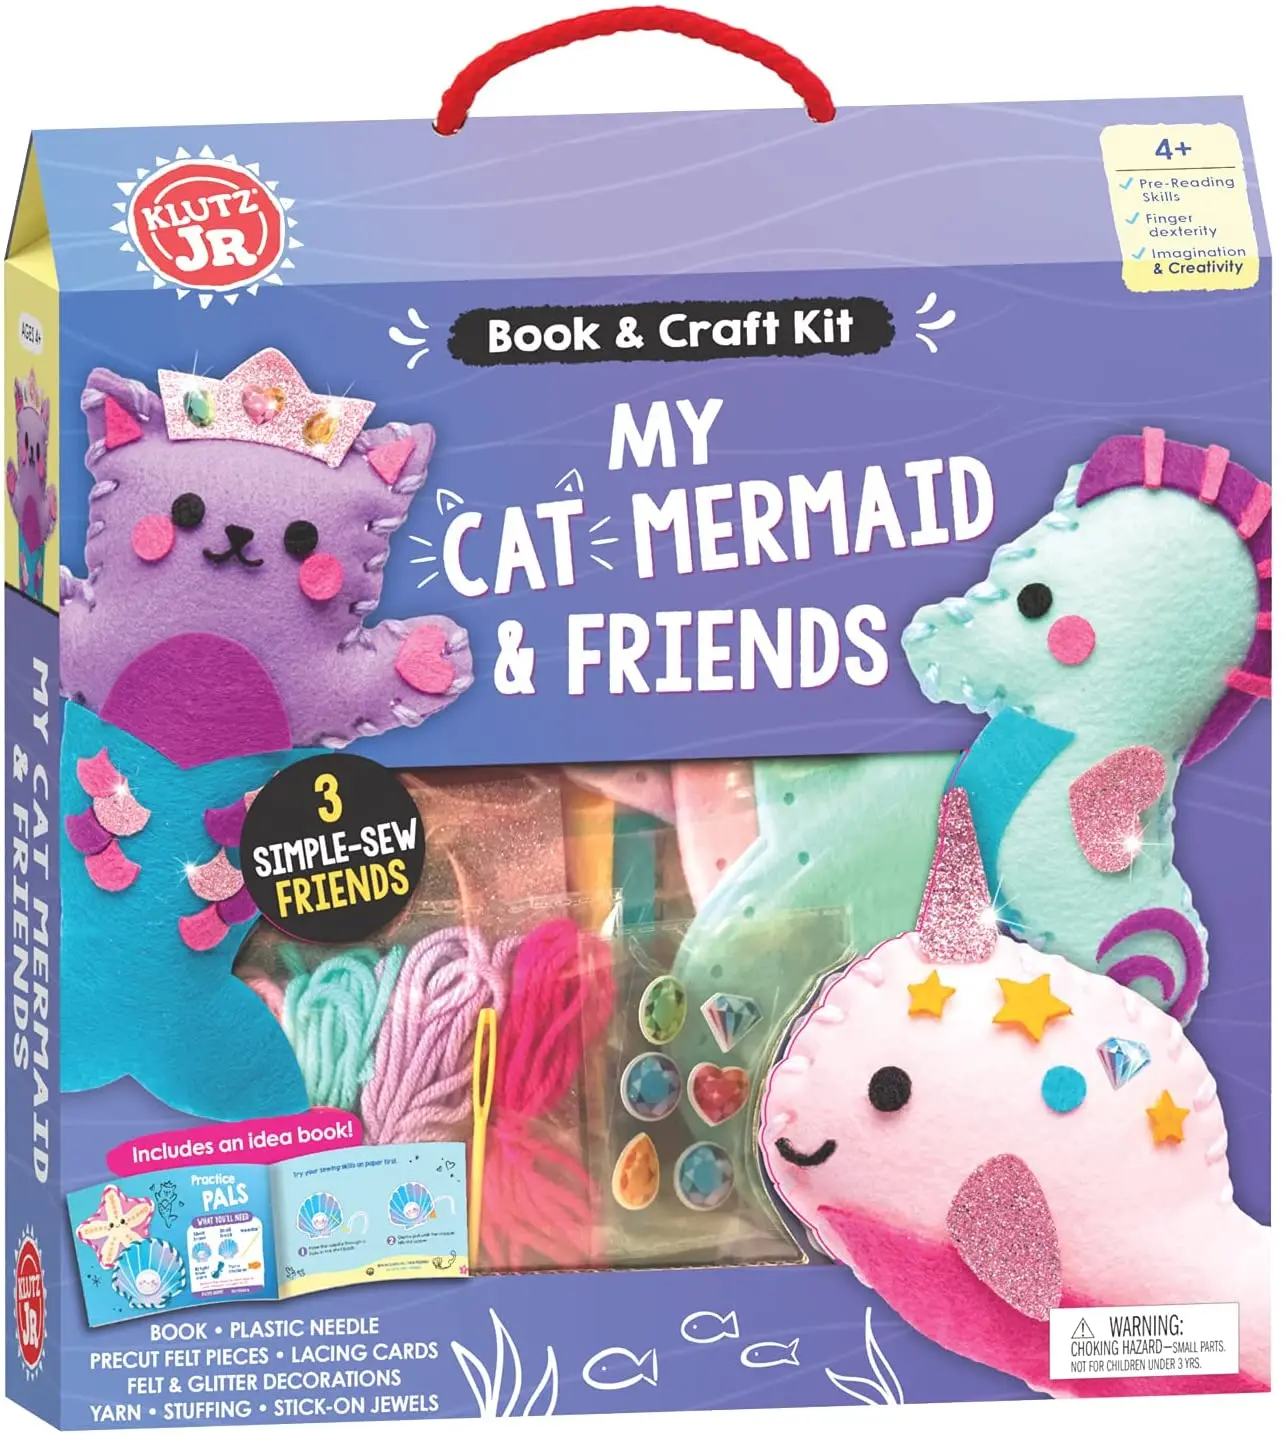 KRAFUN Mermaid Friends Beginner Sewing Kit for Kids Plush Craft Kit, Includes 5 Stuffed Sea Animal Dolls, Instructions & Felt Materials for Learn to Sew, E